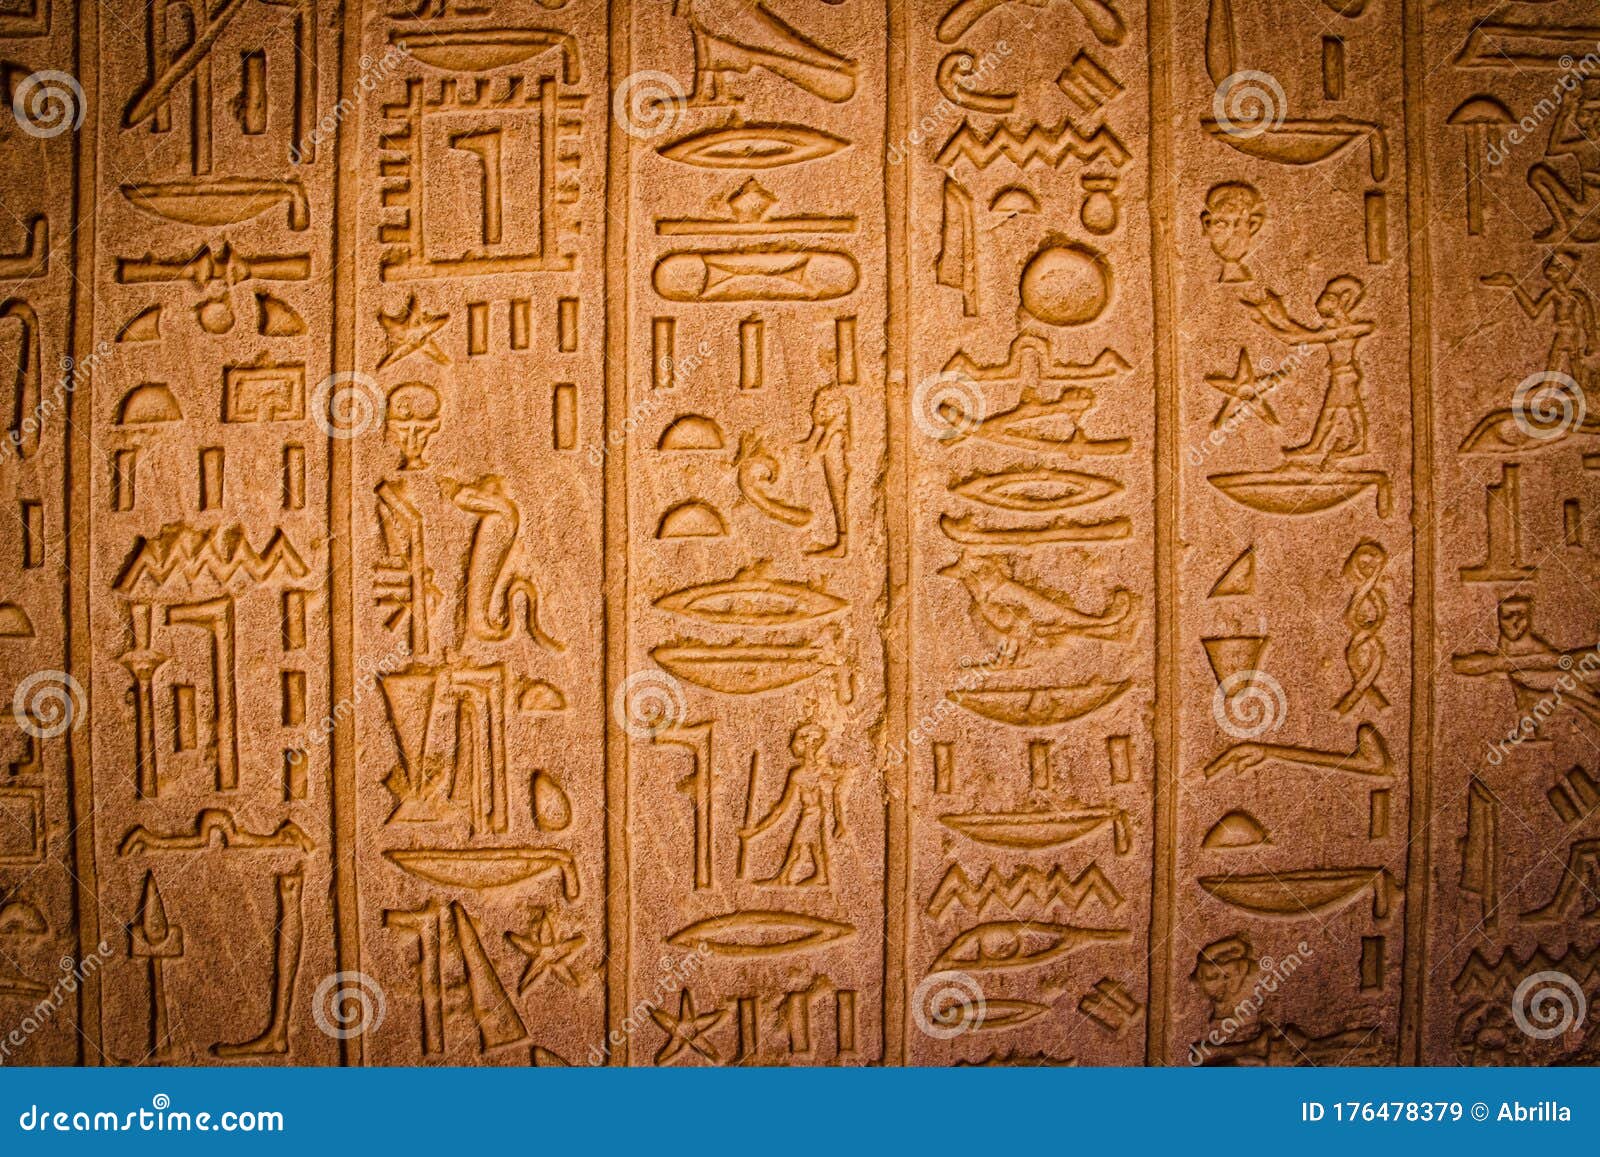 Ancient Egyptian Writing, Egyptian Hieroglyphs, Wall Inscriptions